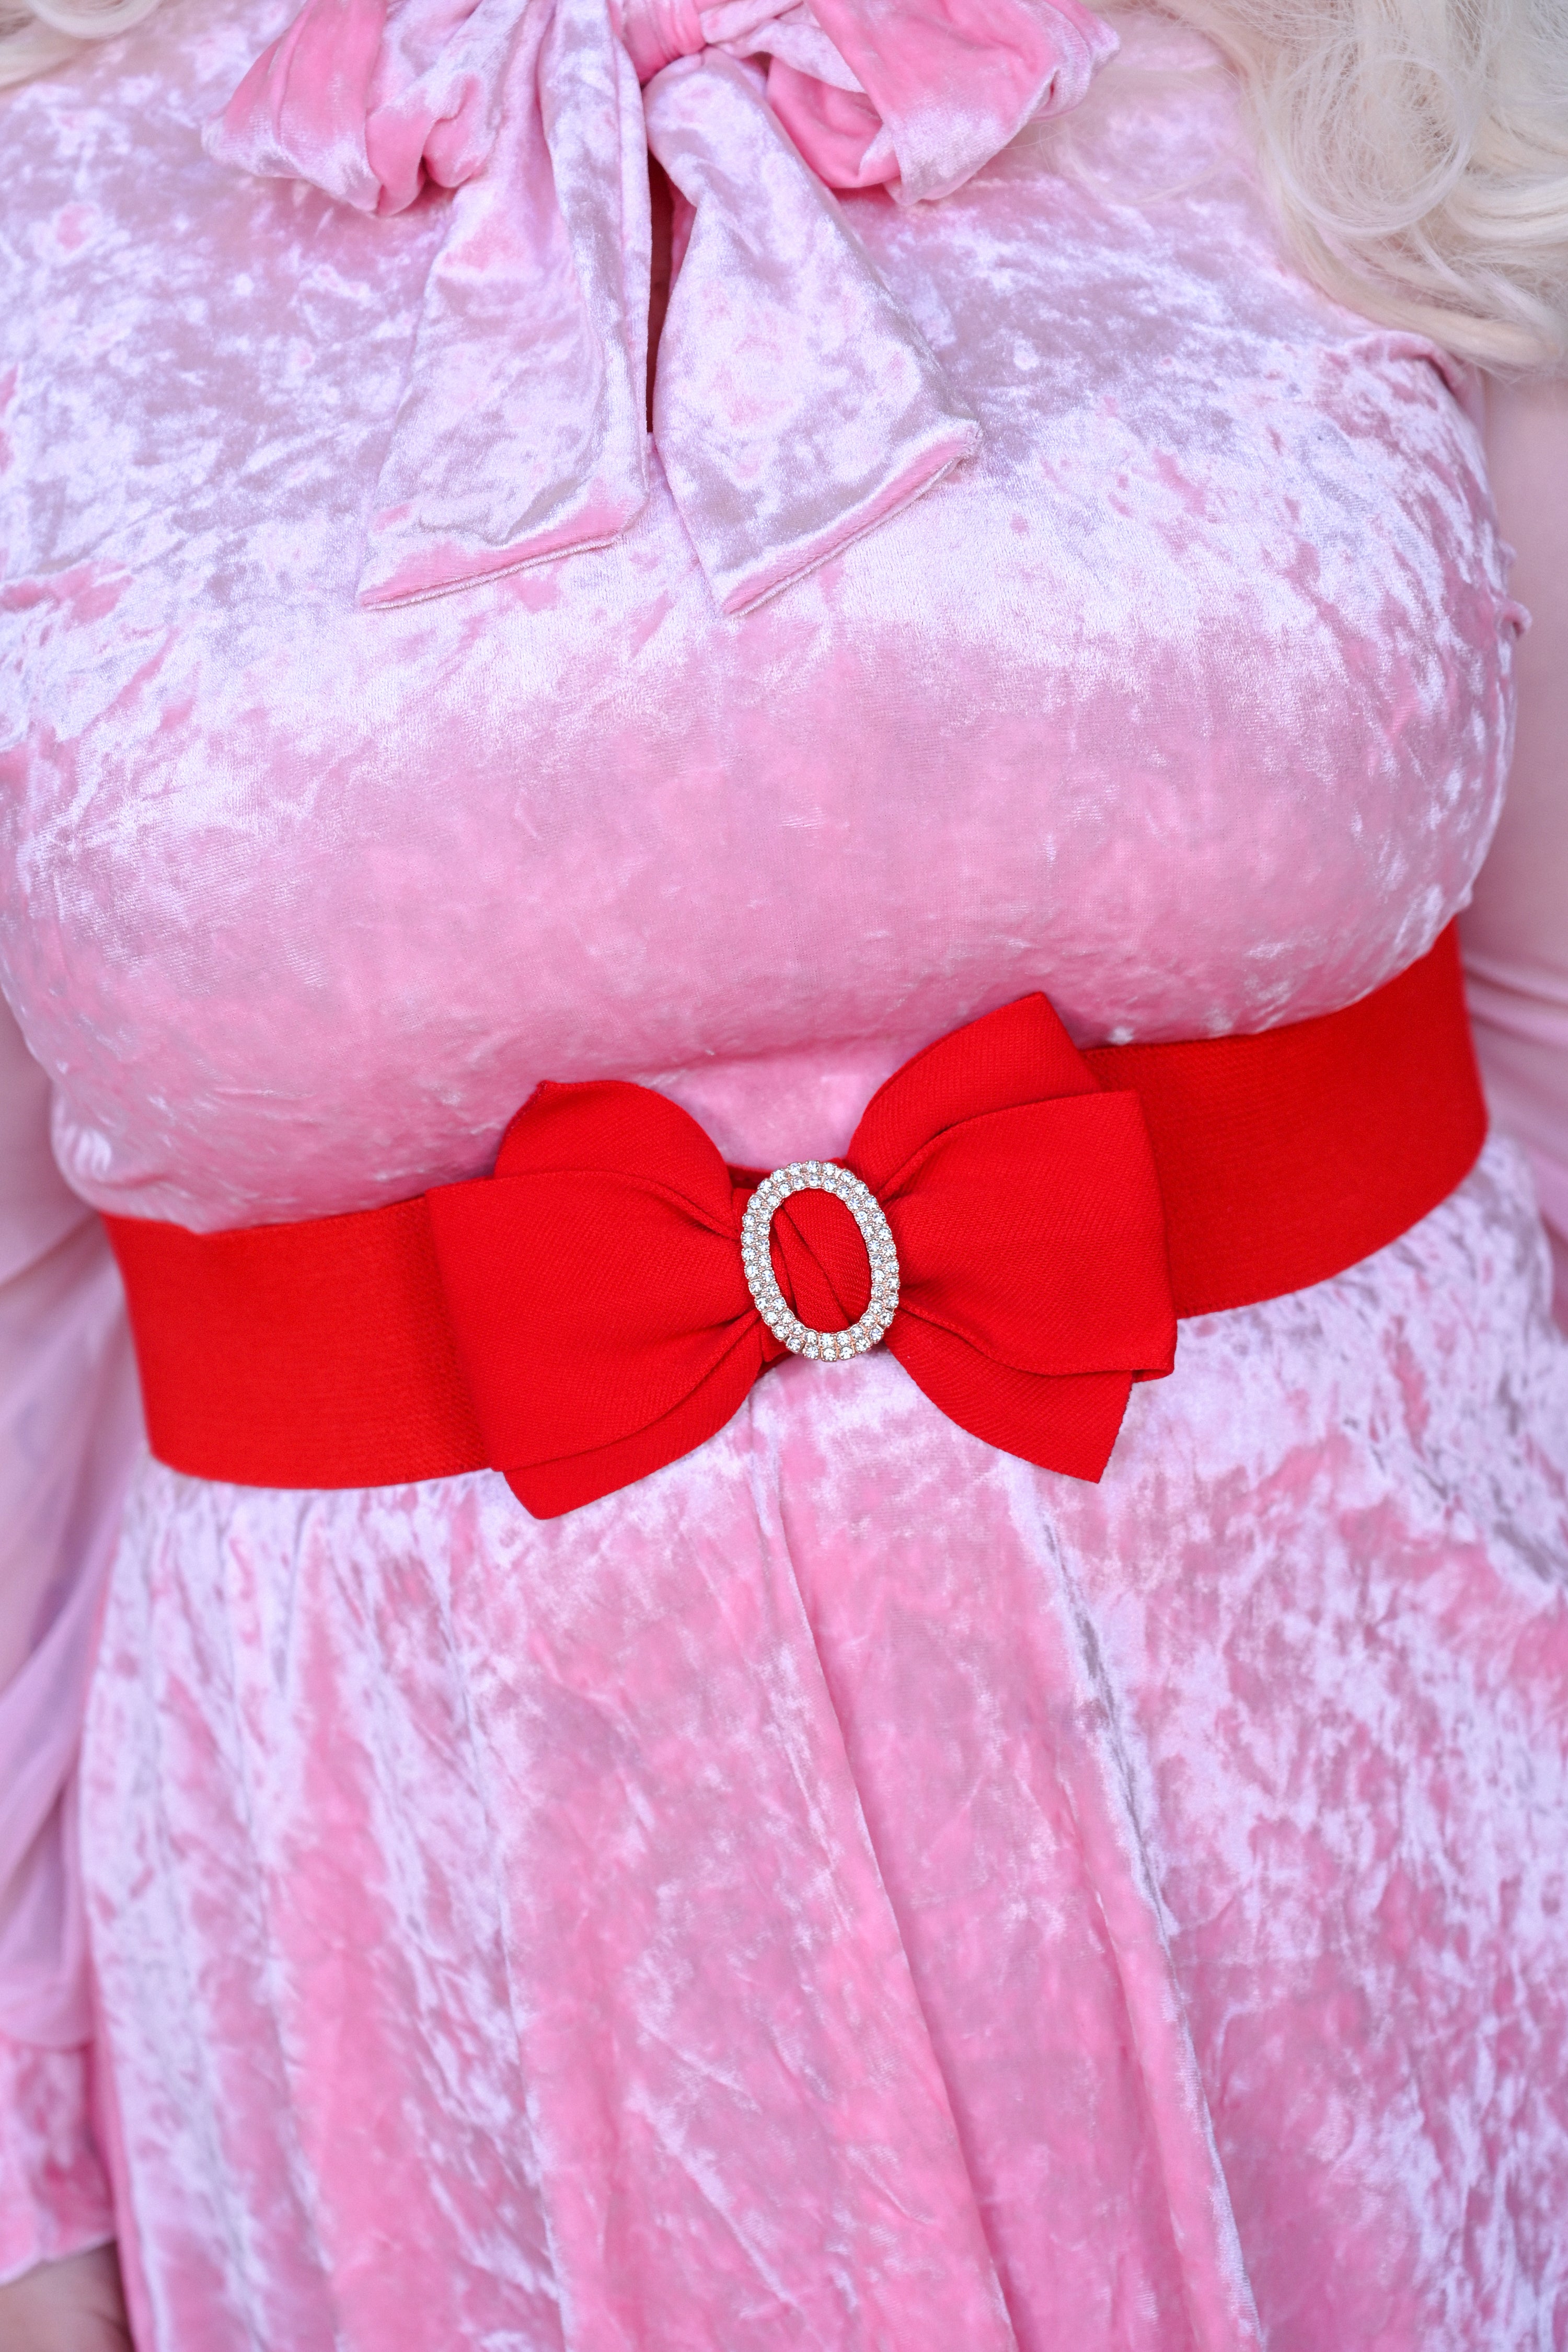 A red belt with a big rhinestone bow and elastic waist